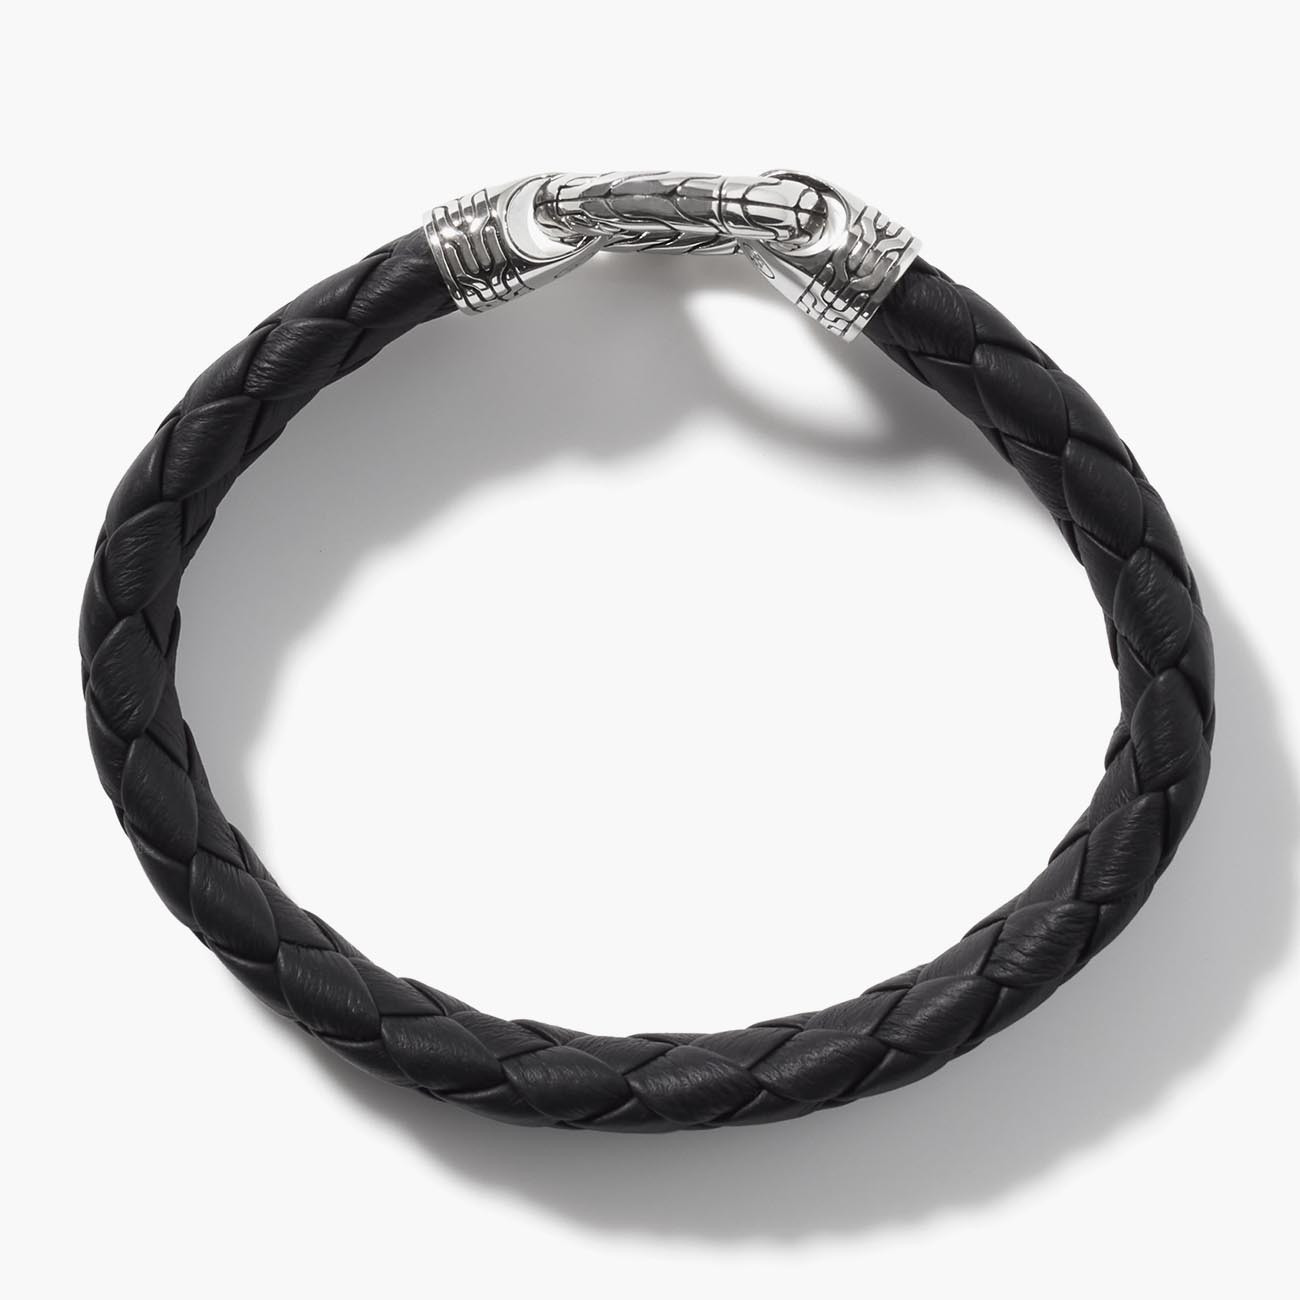 JOHN HARDY Men's Kali Silver Black Woven Leather Bracelet